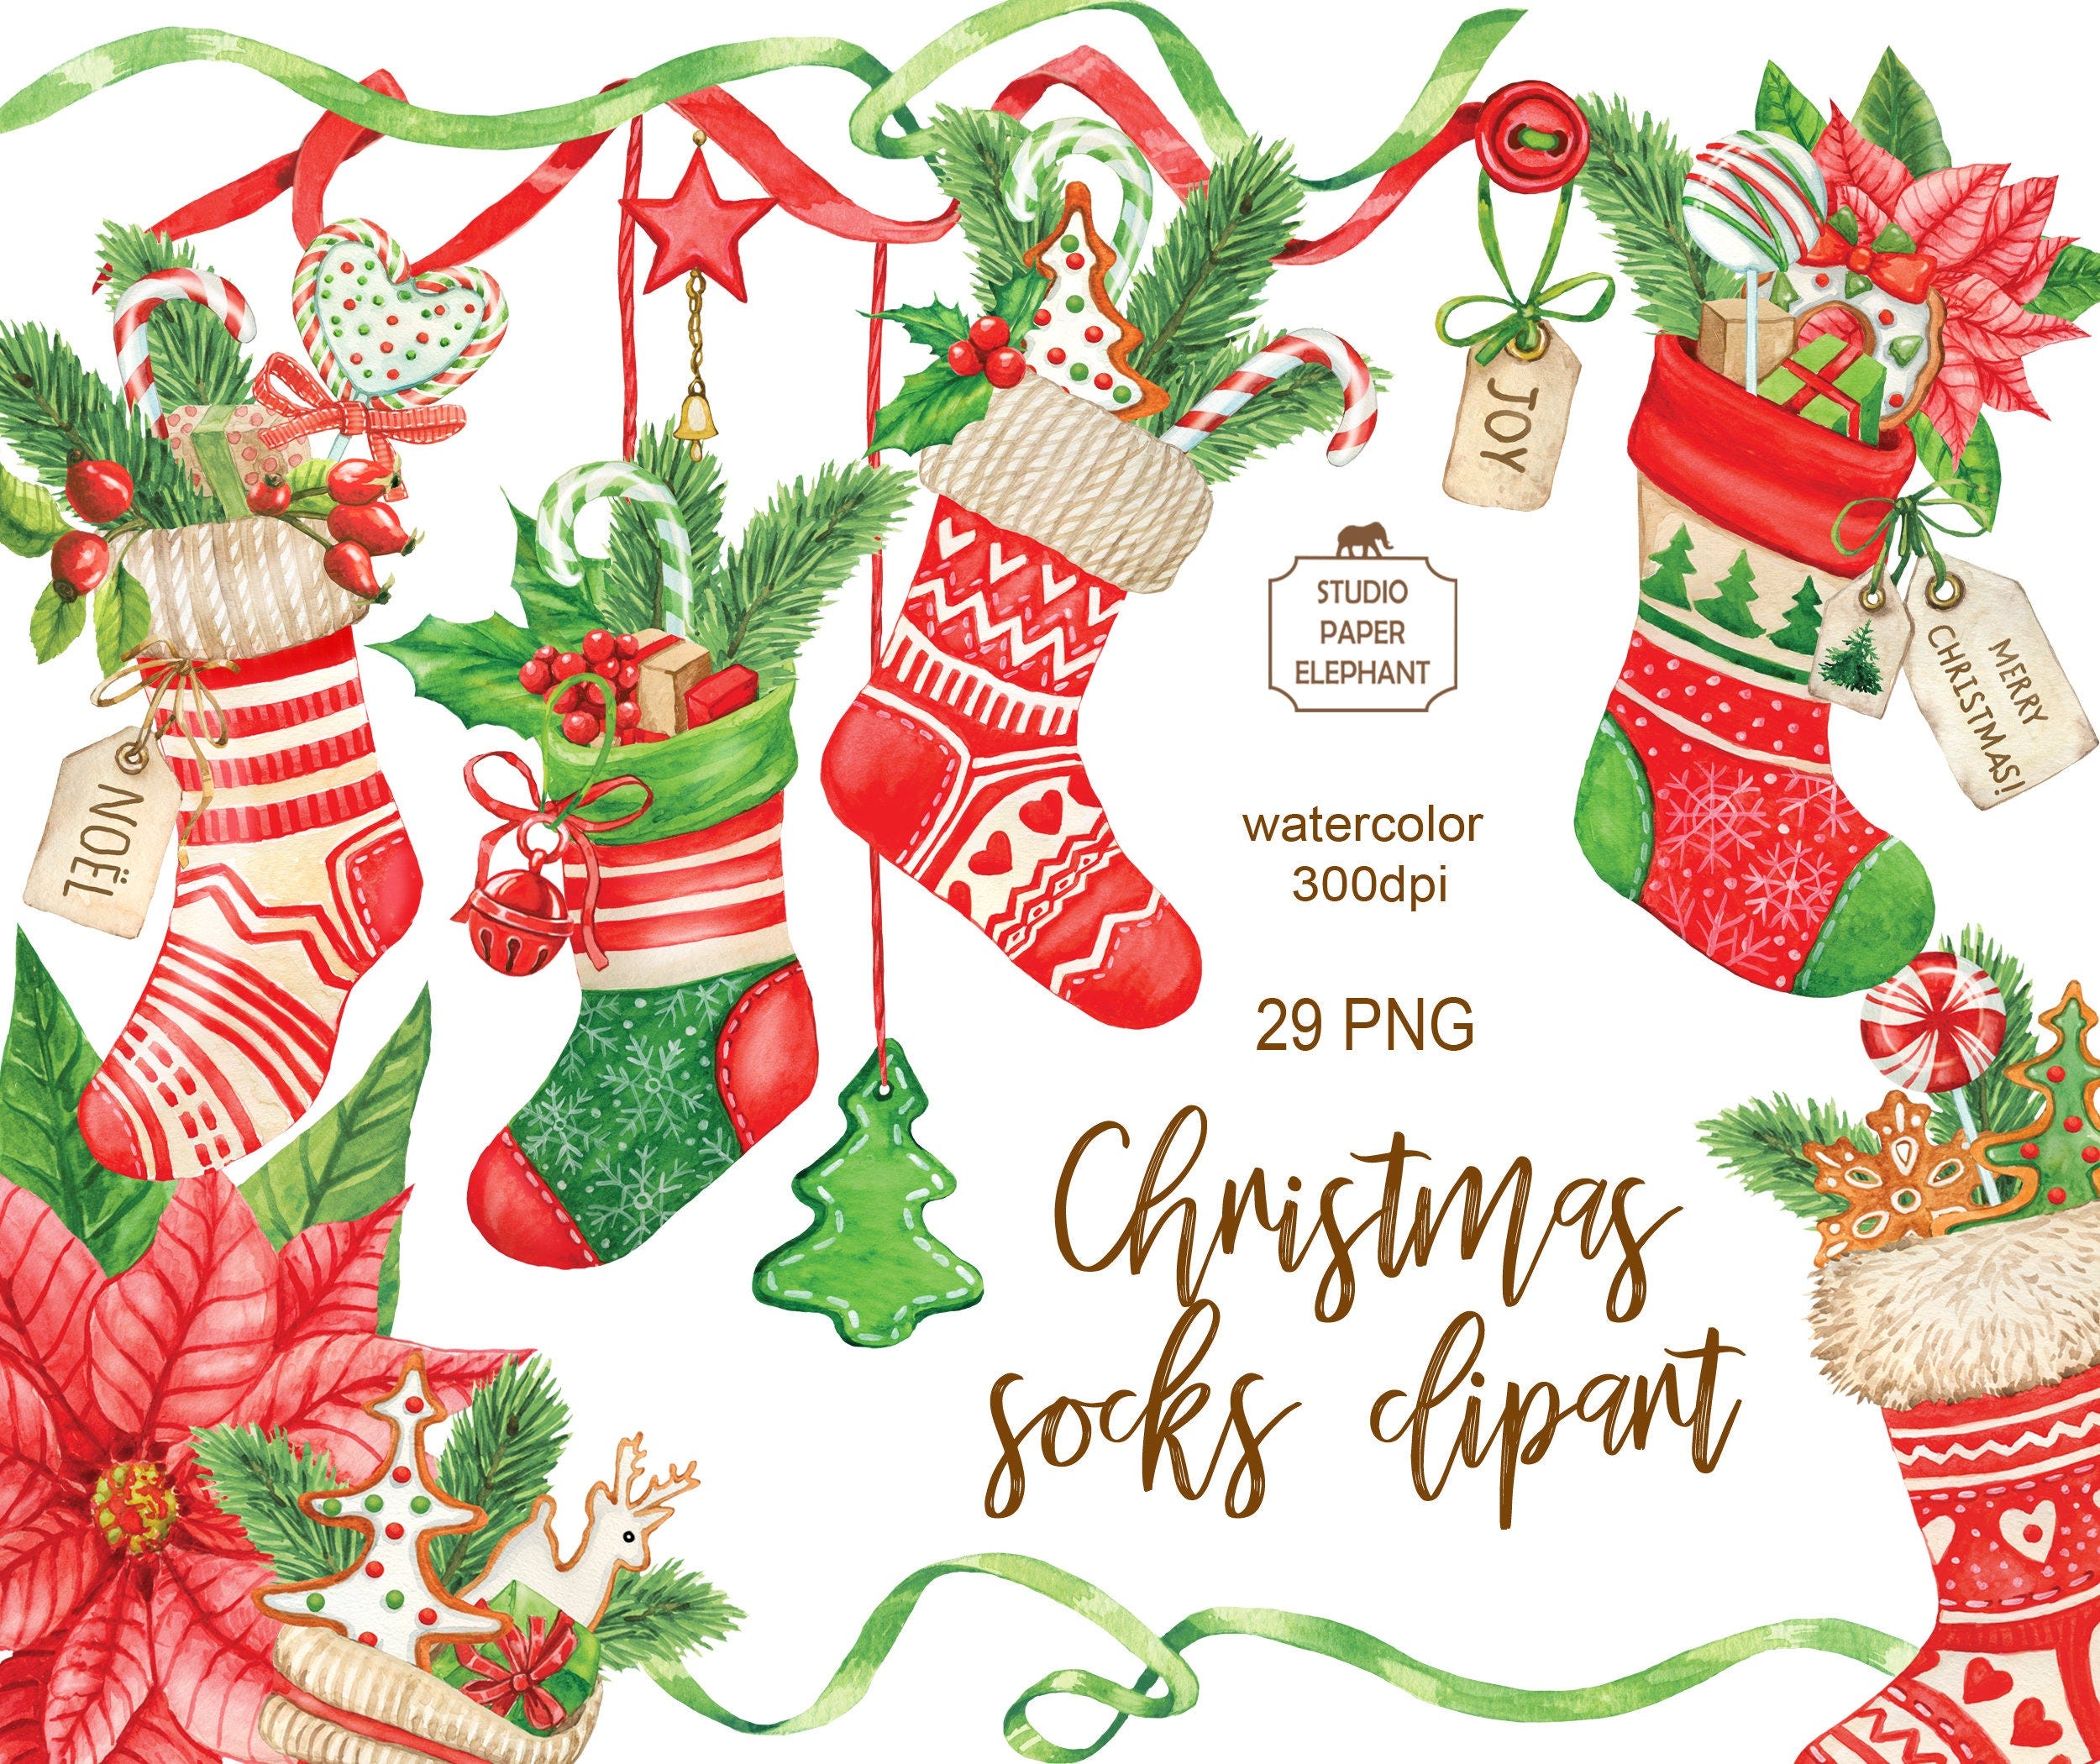 Watercolor Christmas socks clipart, Santa clipart, Christmas socks with gifts, stickers with Christmas socks, Christmas clipart, PNG.